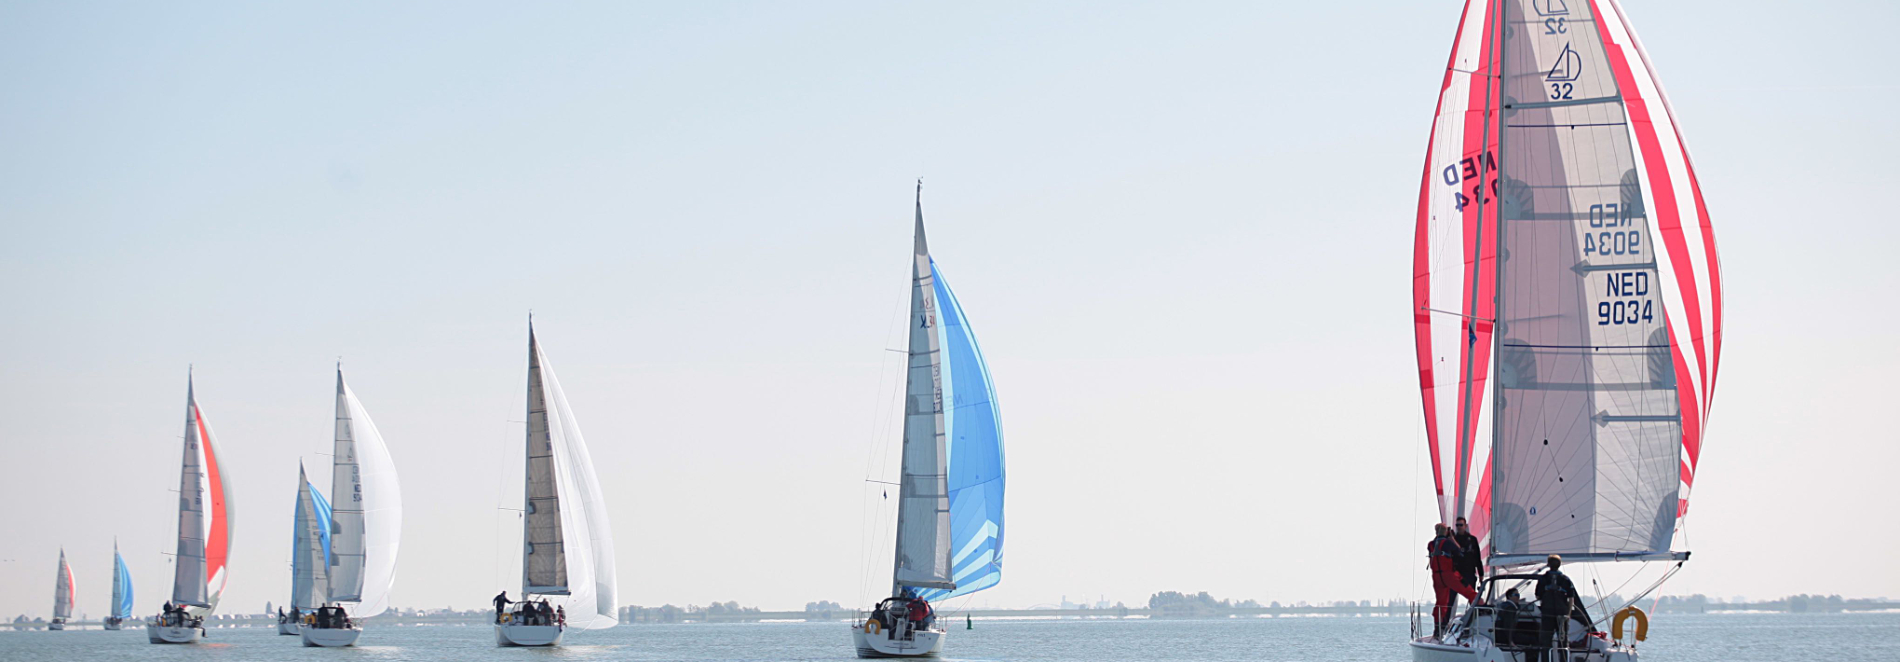 waterland yacht charter nl